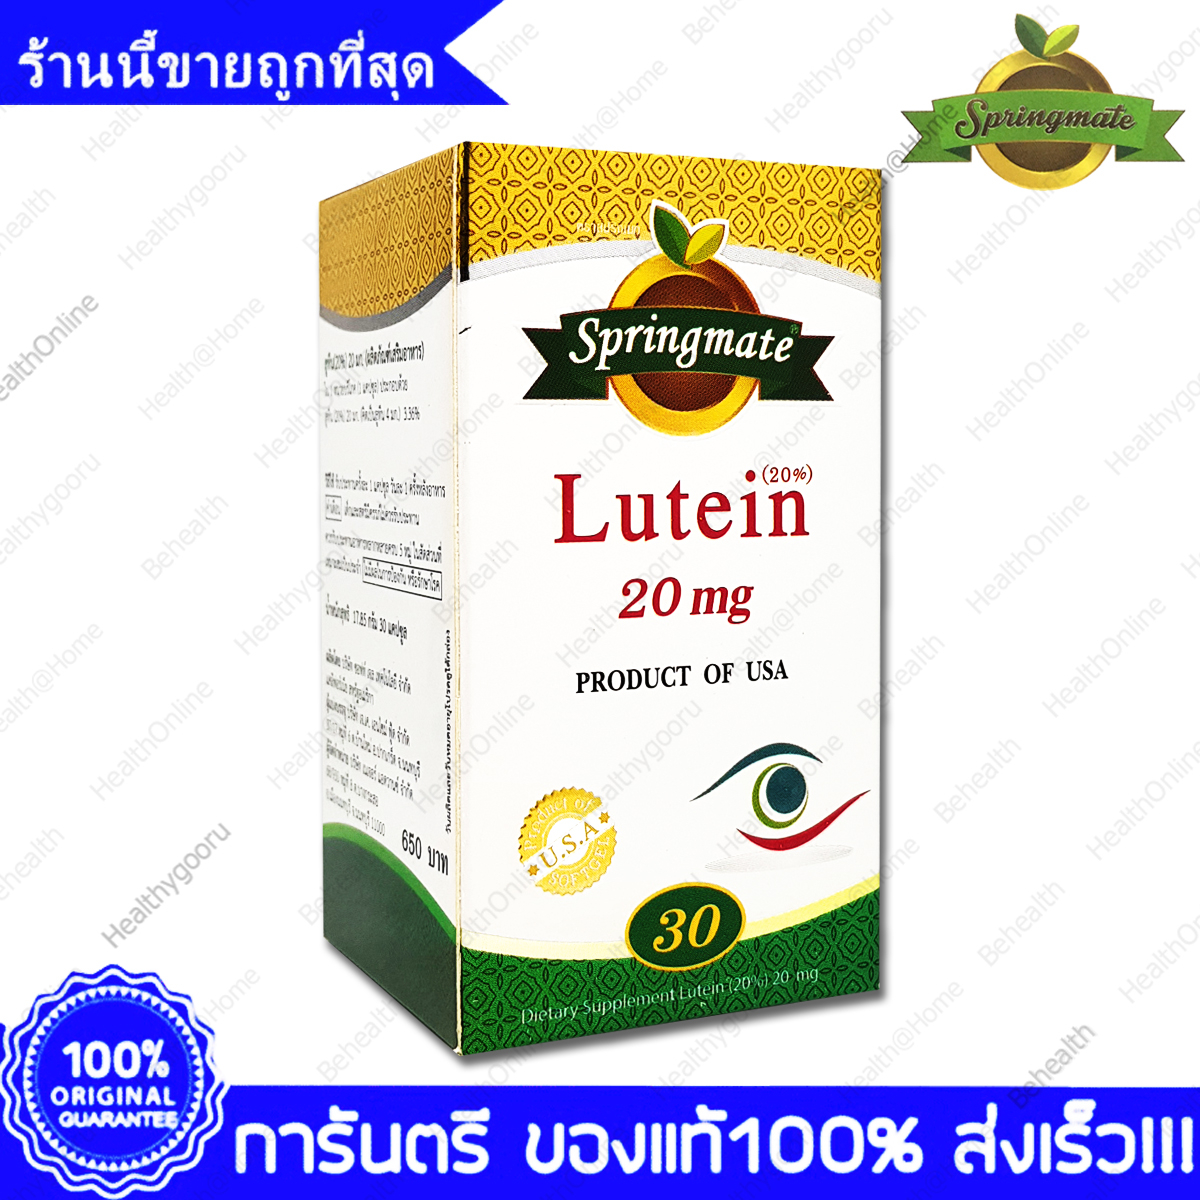 Springmate Lutein สปริงเมท ลูทีน 20 mg 30 แคปซูล